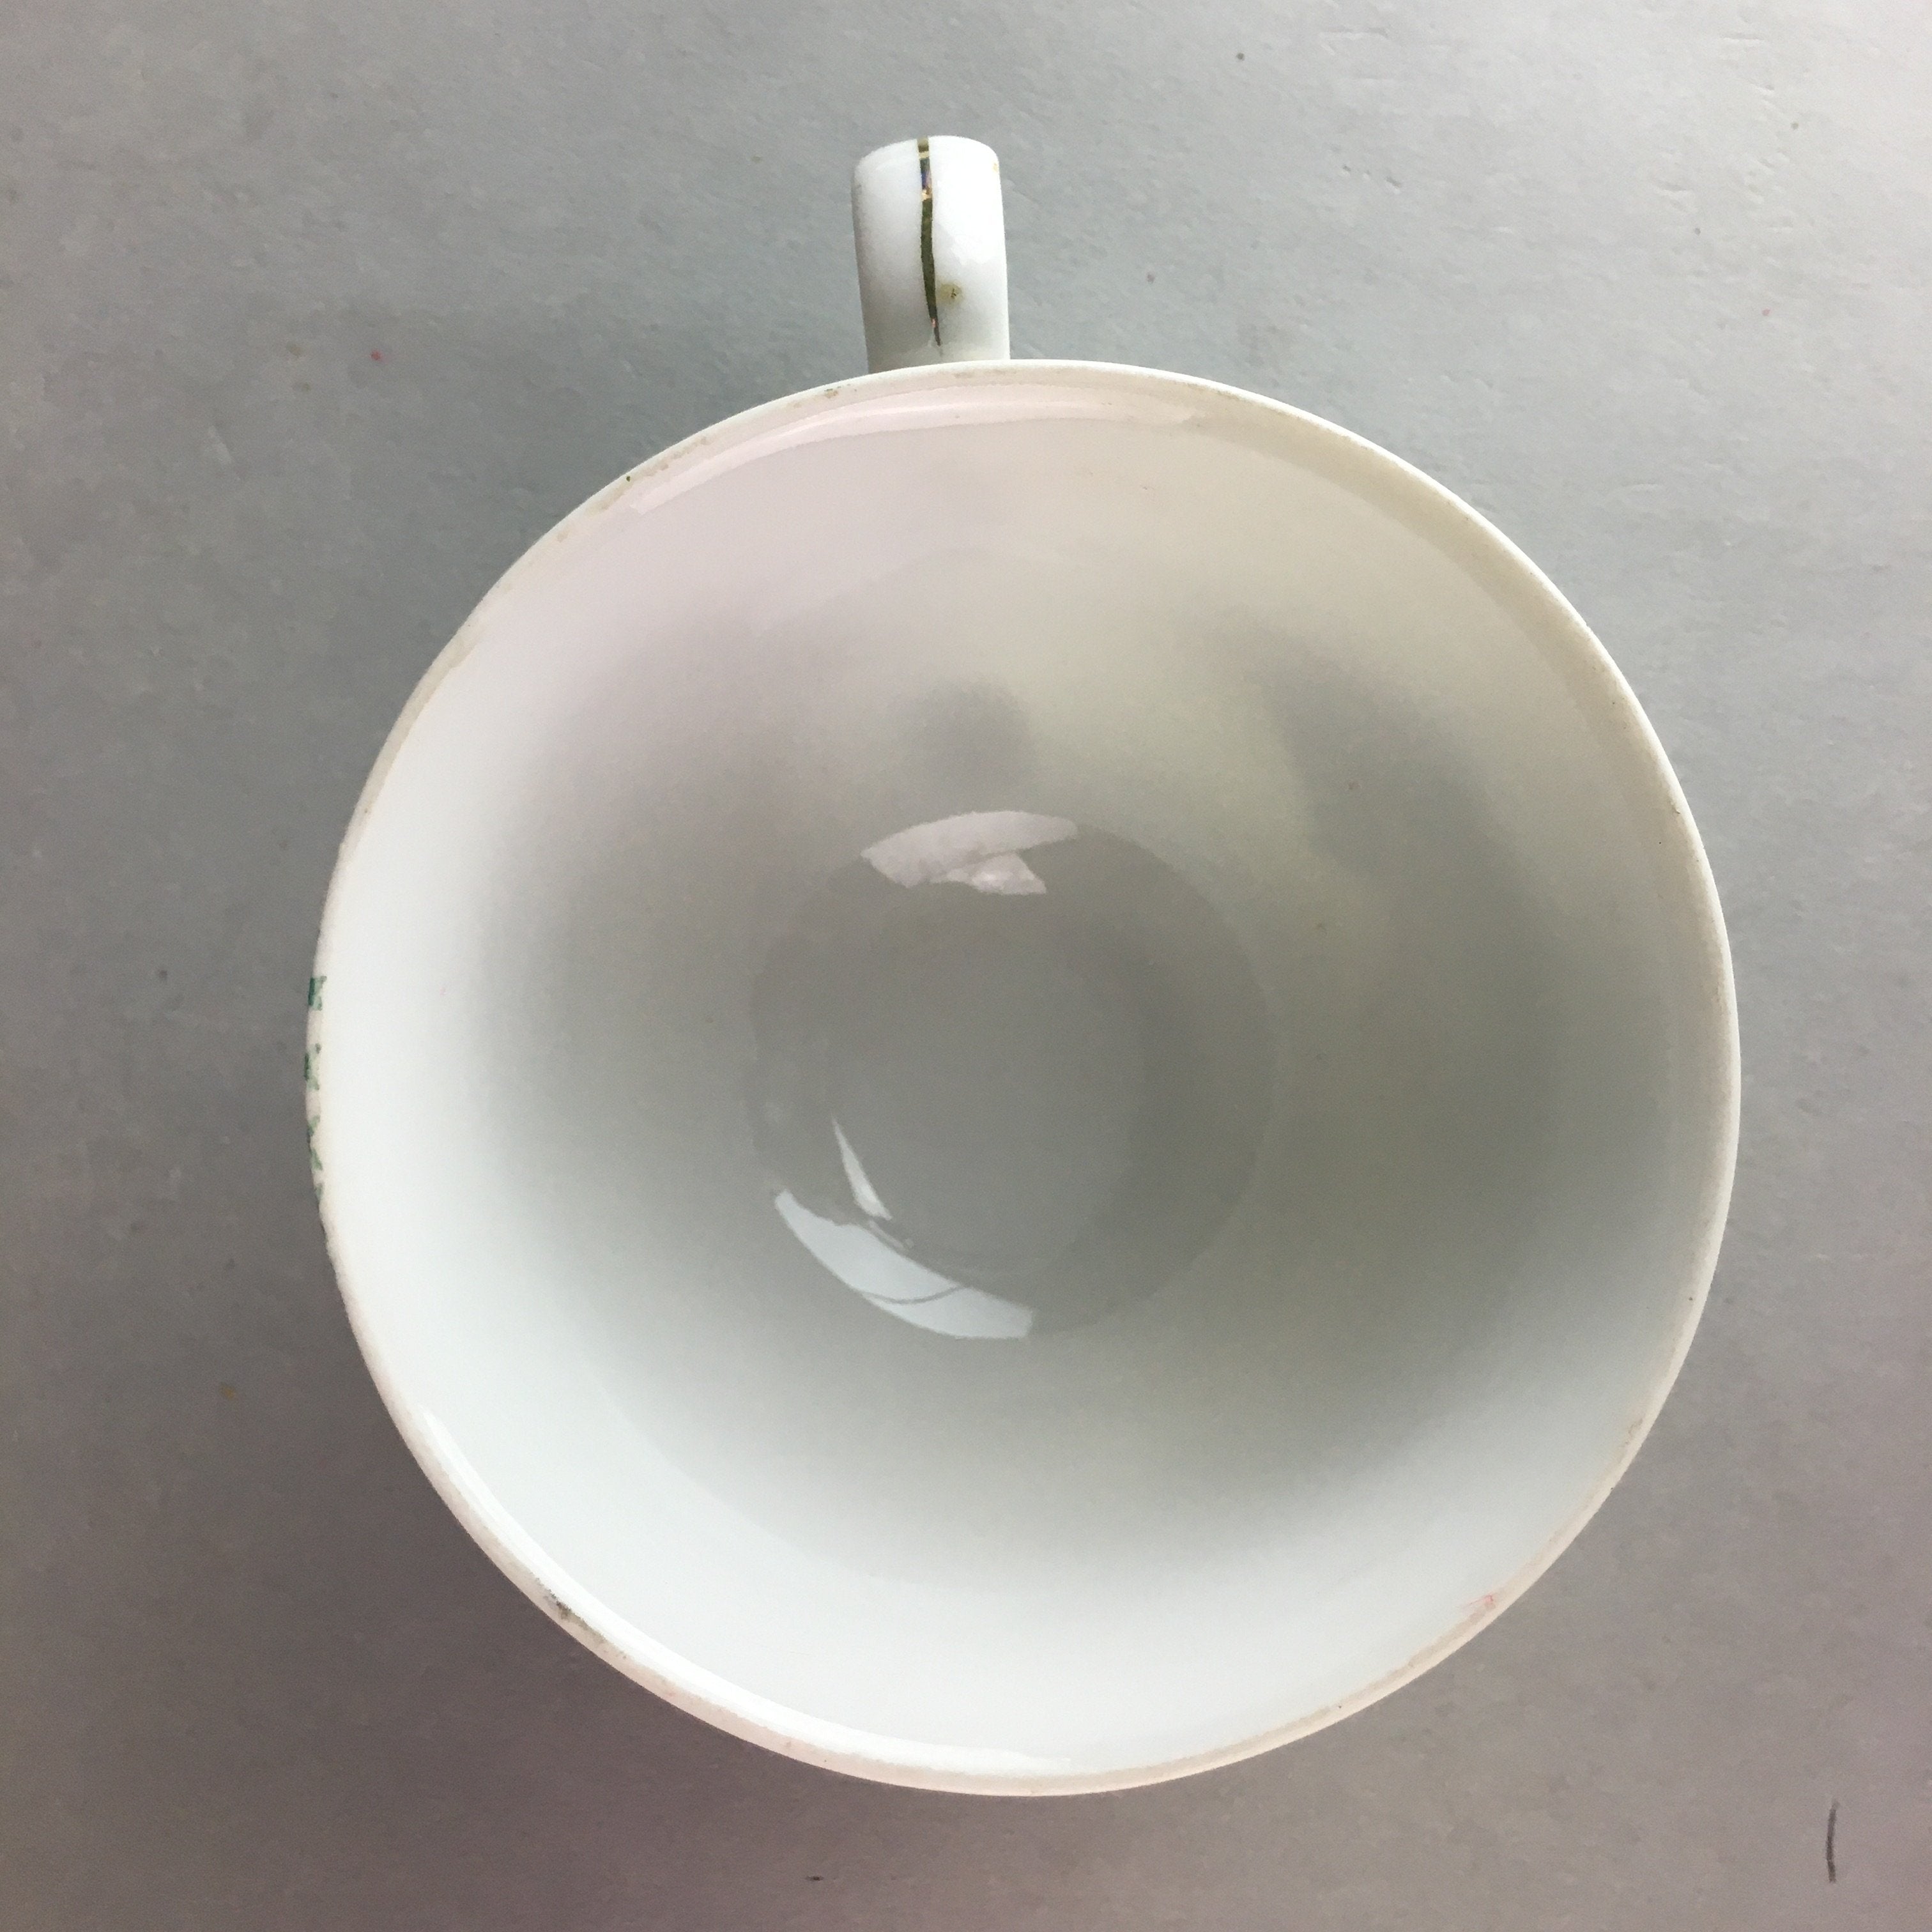 Japanese Porcelain Teacup Mug Saucer Vtg Yunomi Plate Set Plaid PP311